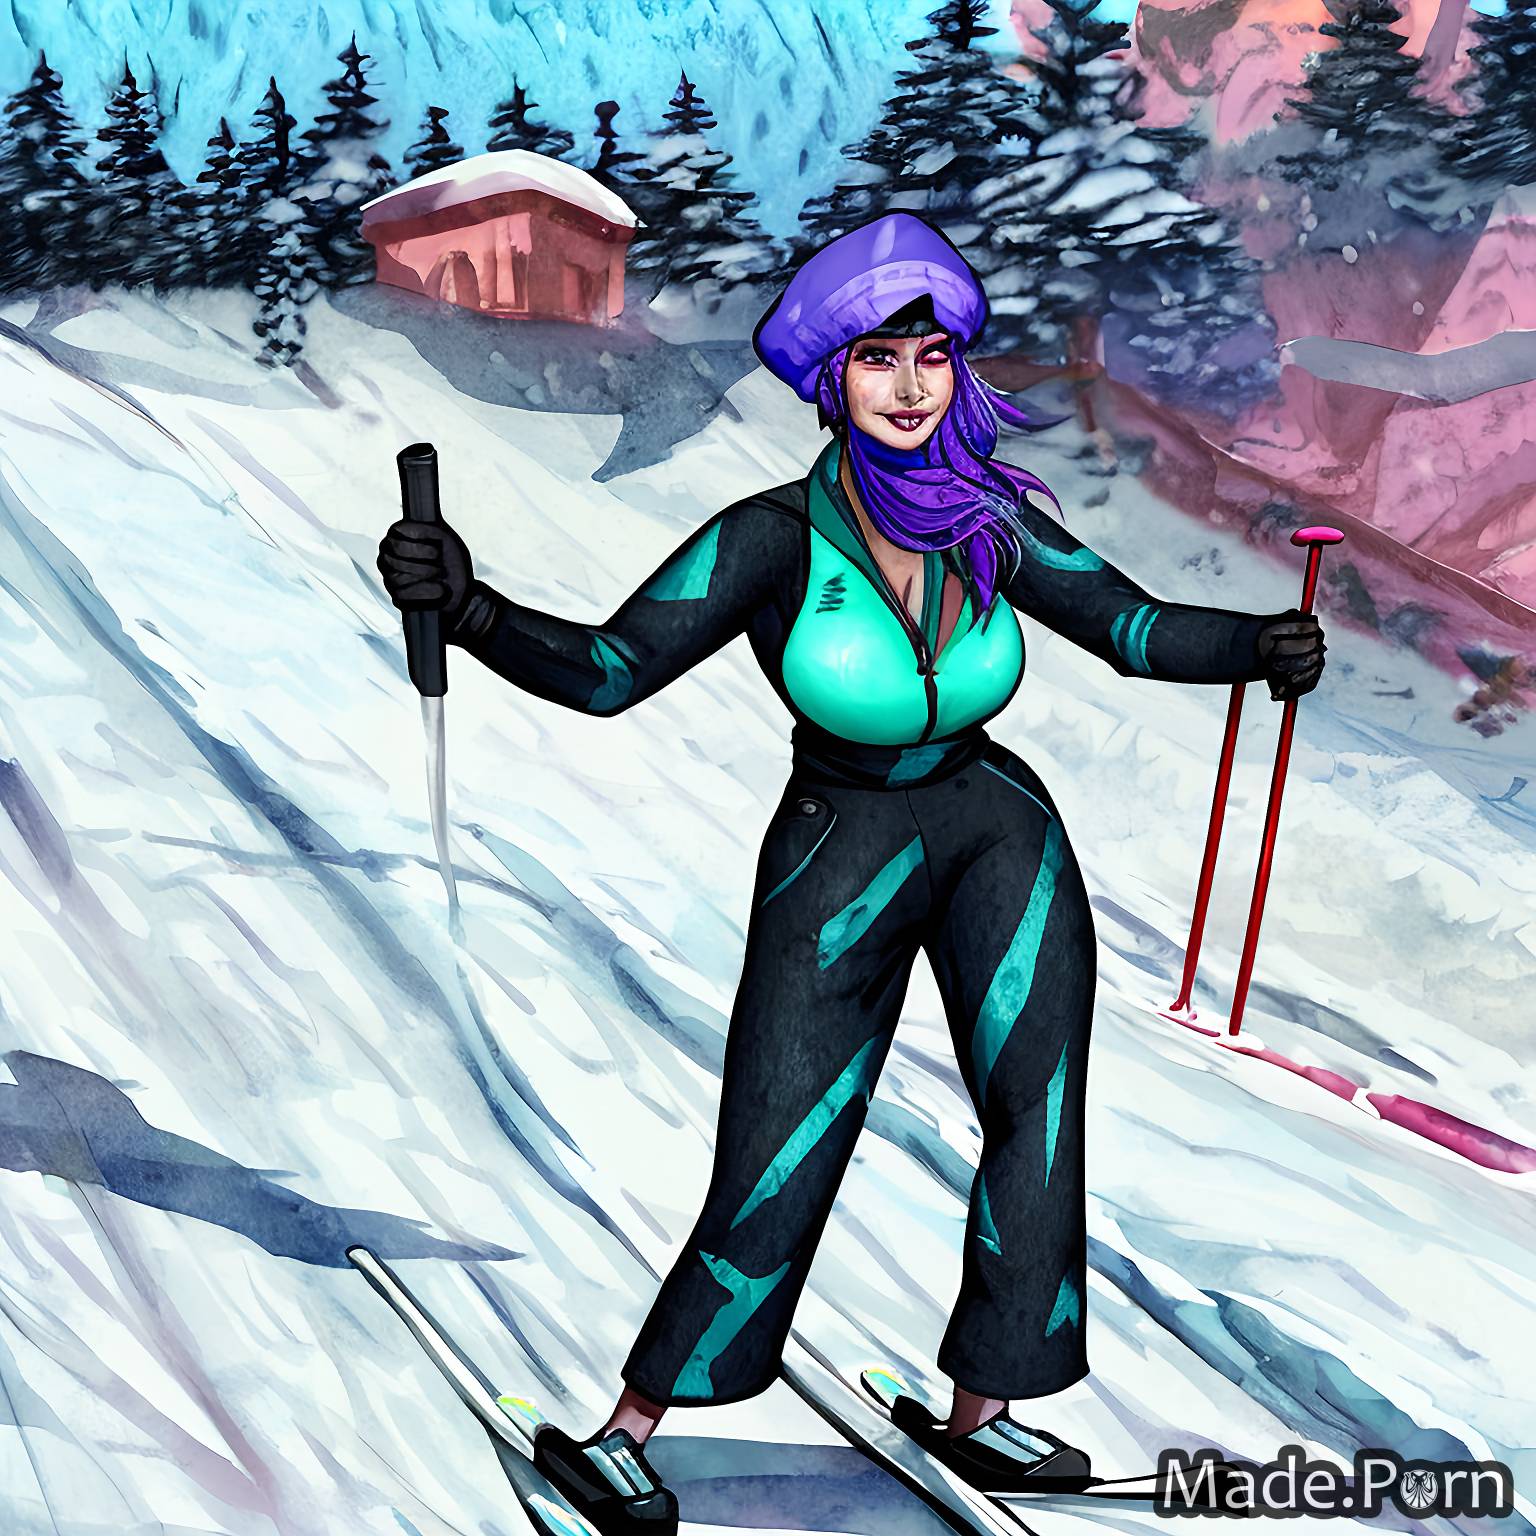 confused anodized metal shemale lebanese skis purple hair Mesa Verde, USA